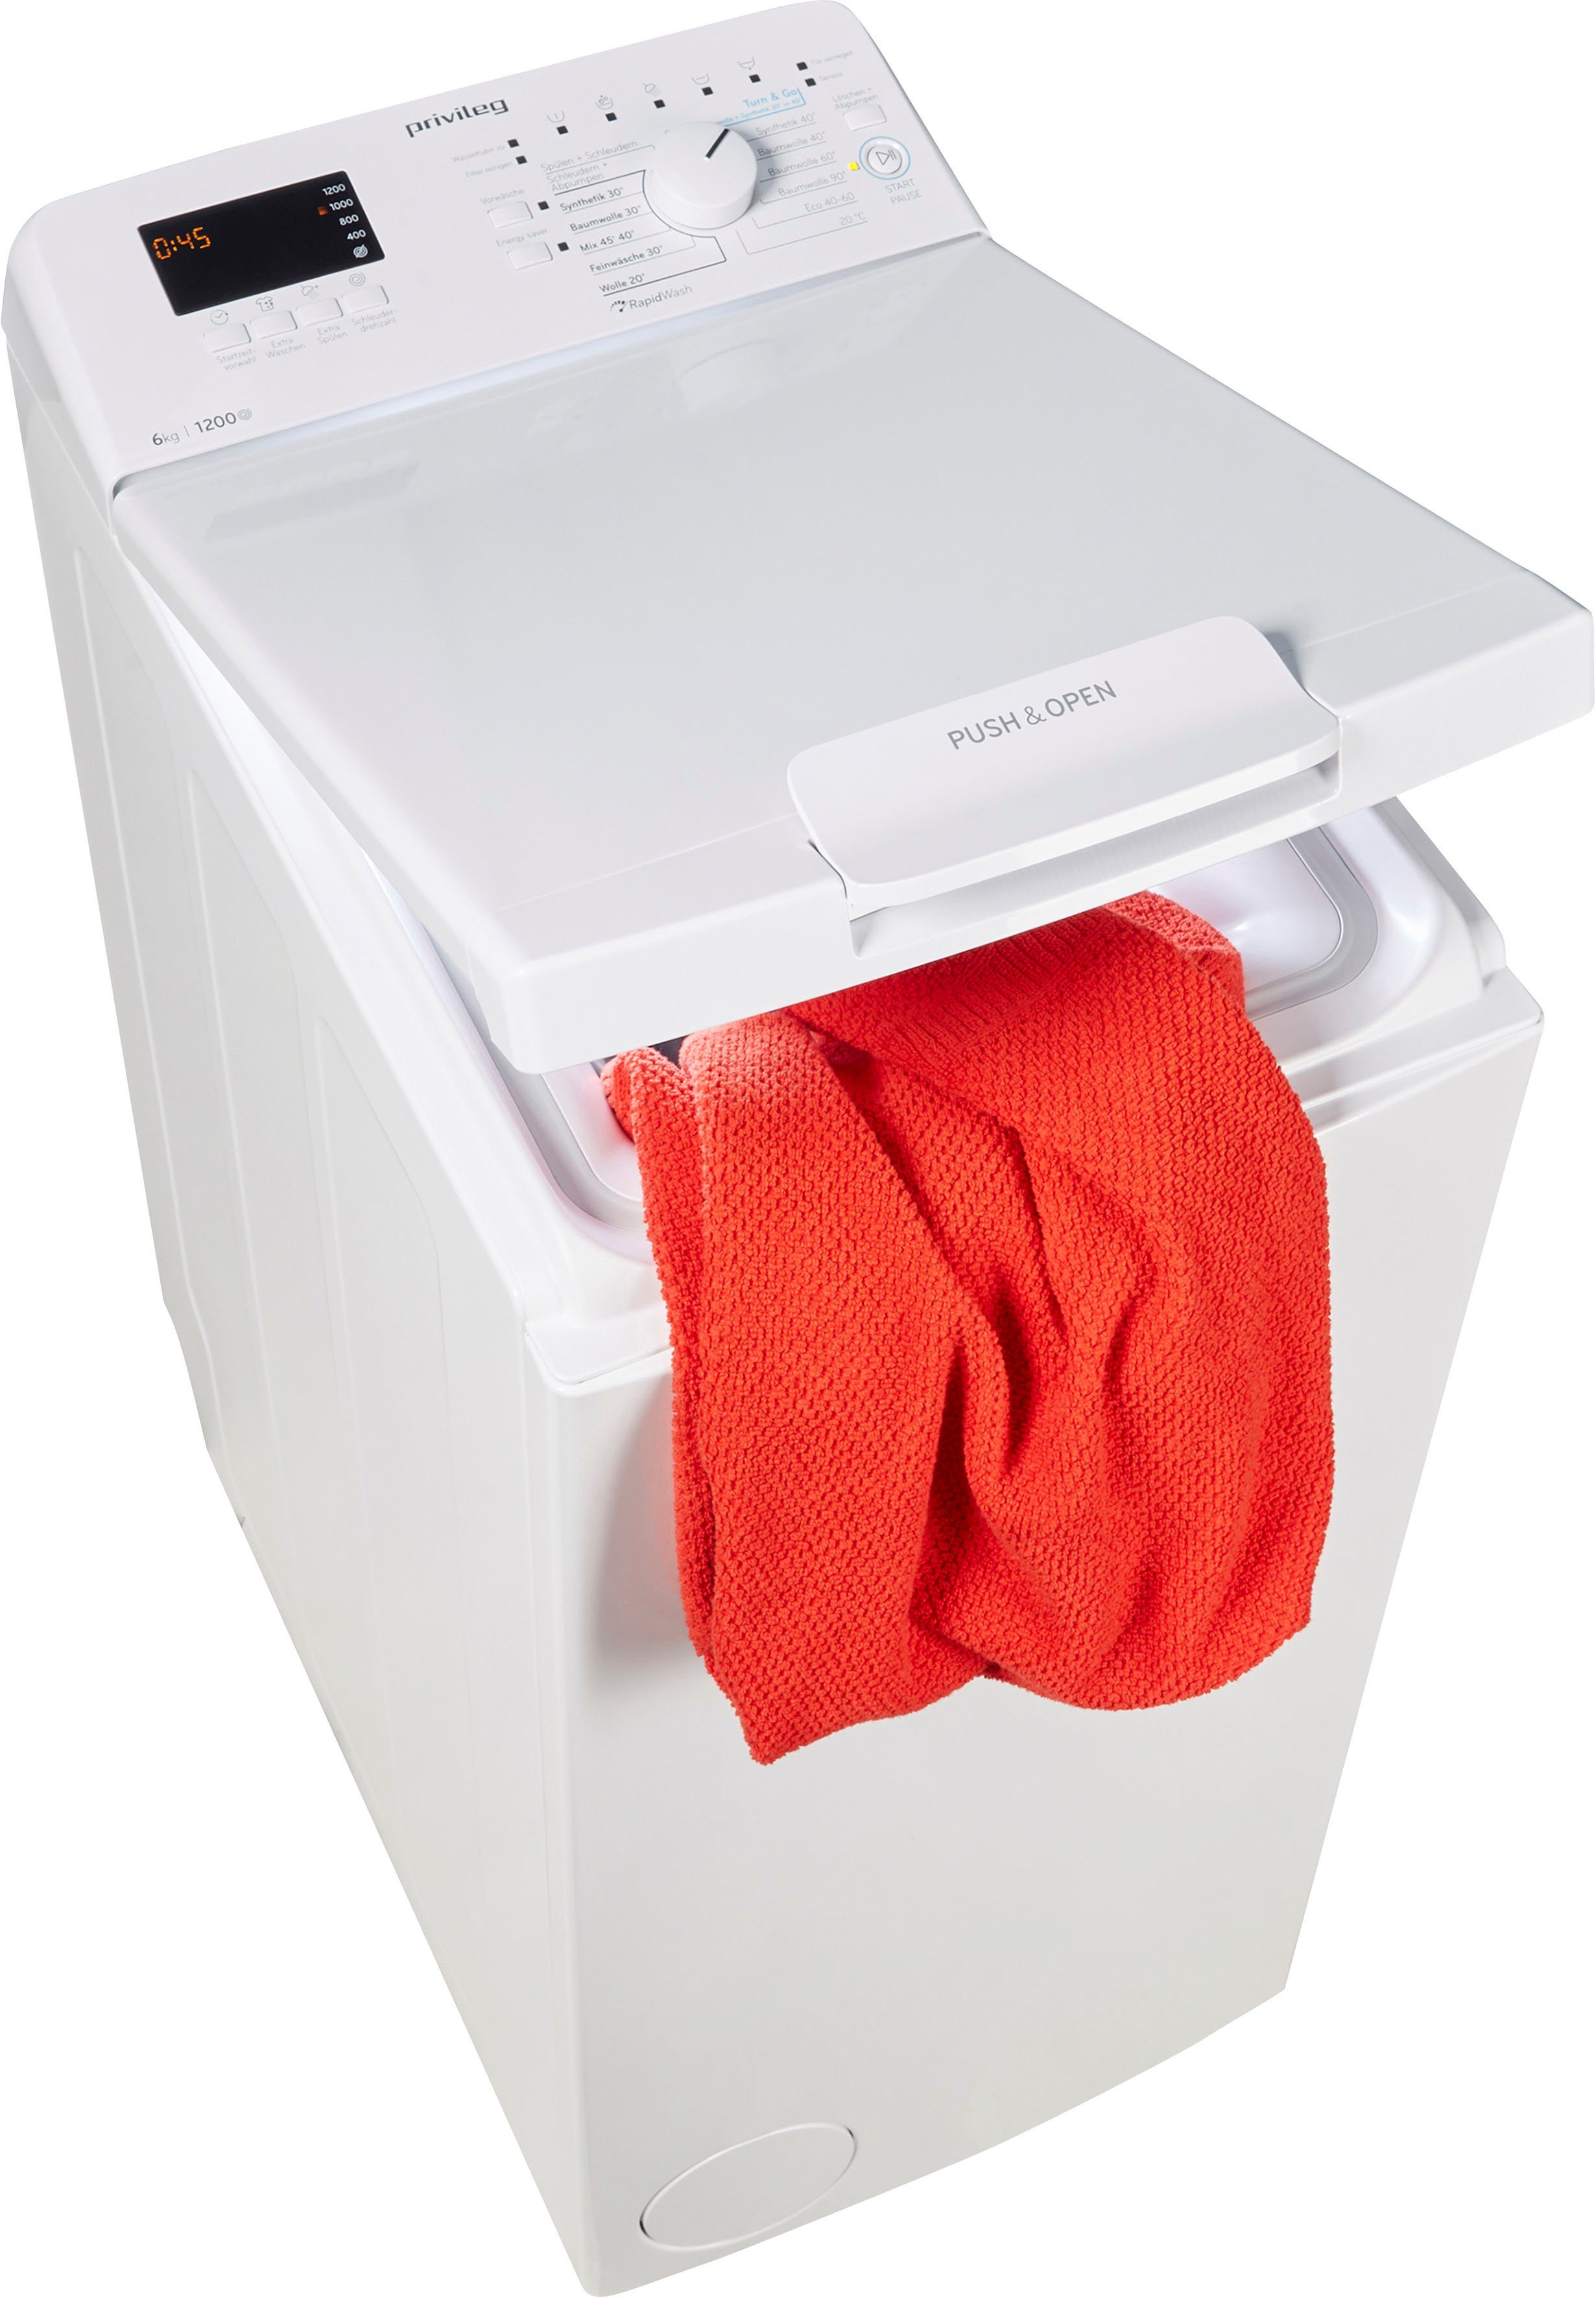 kg, Privileg Toplader Family Waschmaschine E612531P 1200 N PWT Edition Monate U/min, 6 (DE), 50